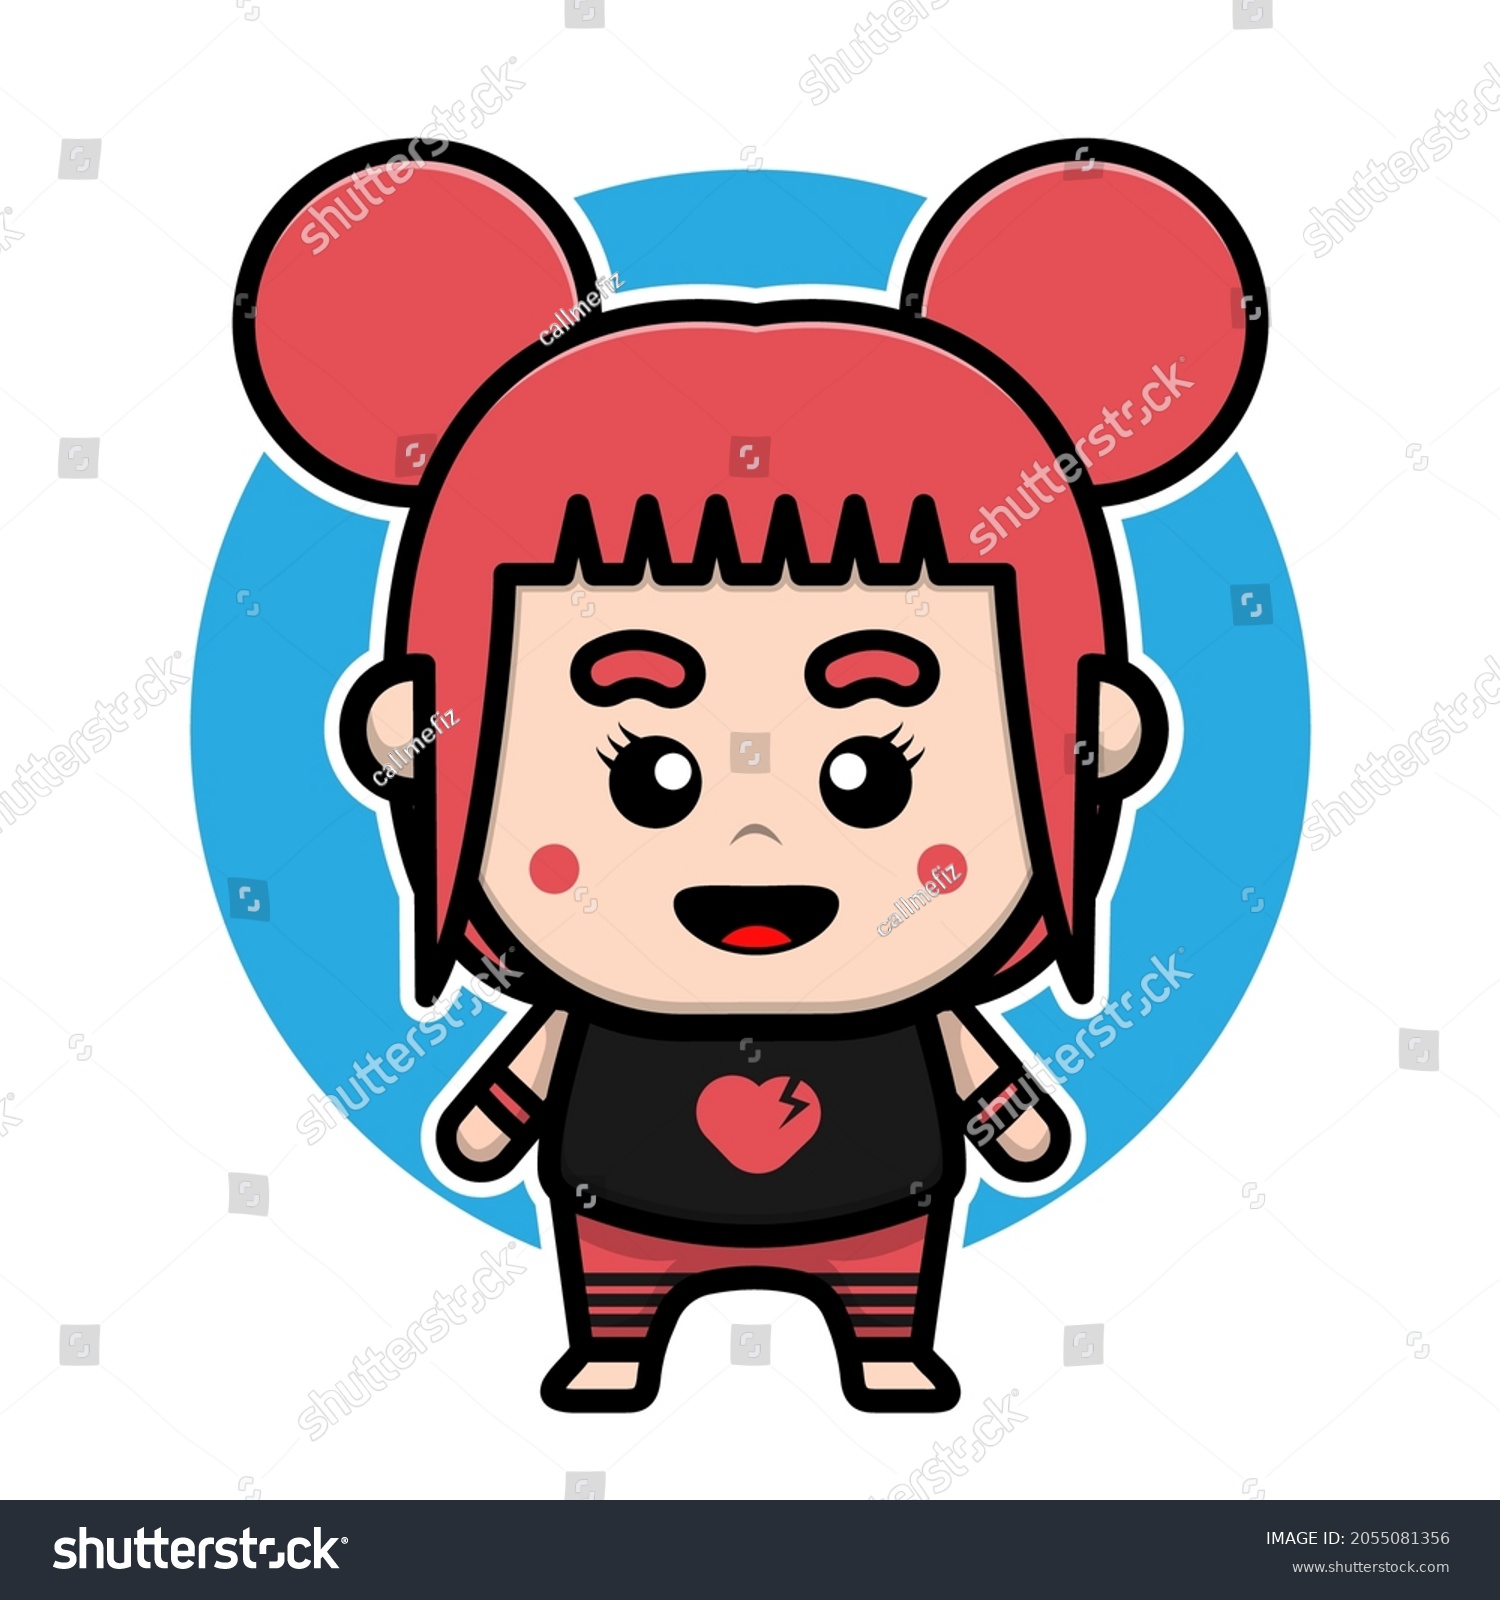 Cute Emo Girl Character Design Stock Vector Royalty Free 2055081356